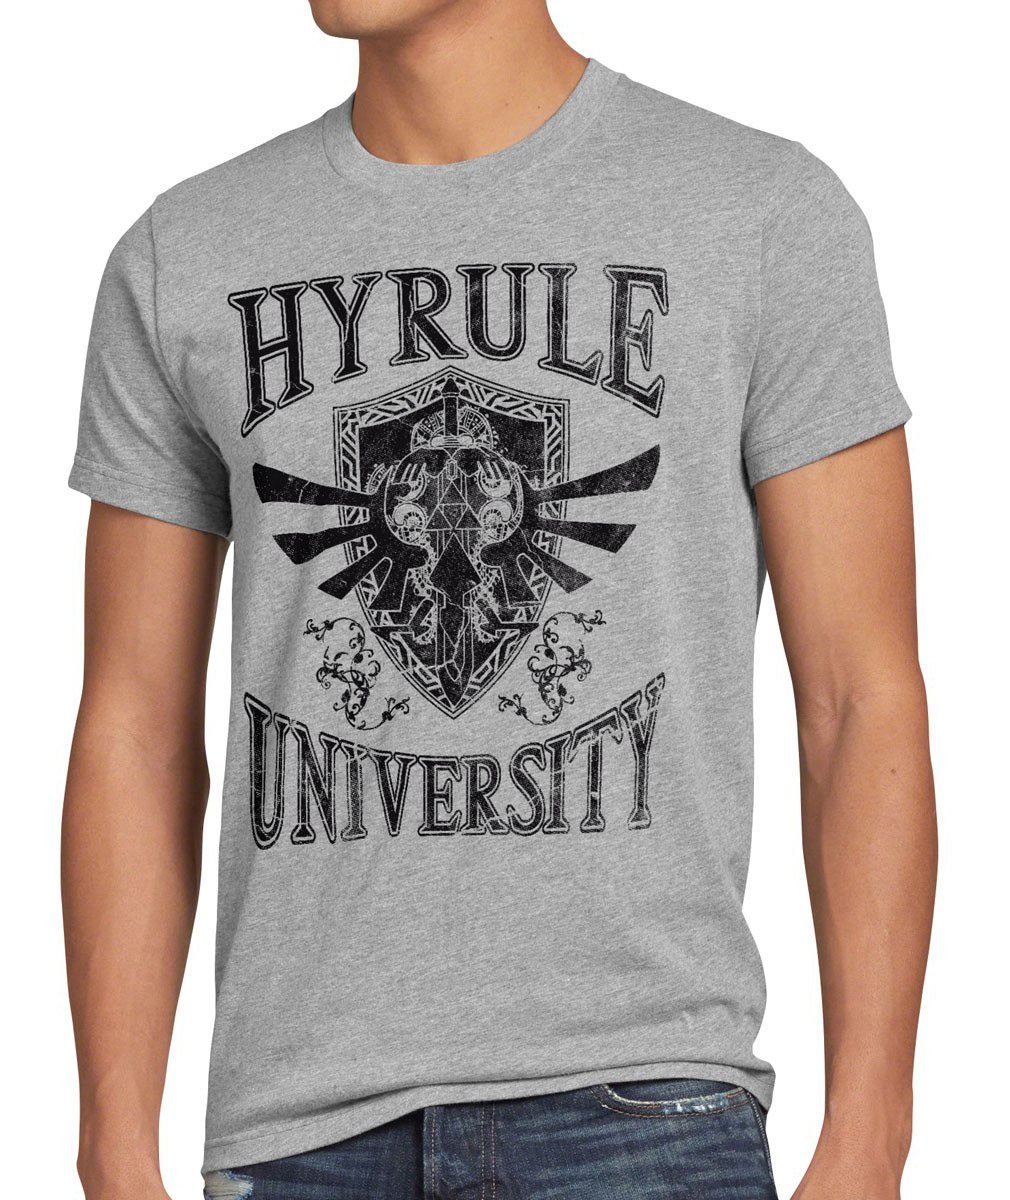 University zelda past meliert T-Shirt ocarina wii time waker link Herren grau style3 Hyrule Print-Shirt switch